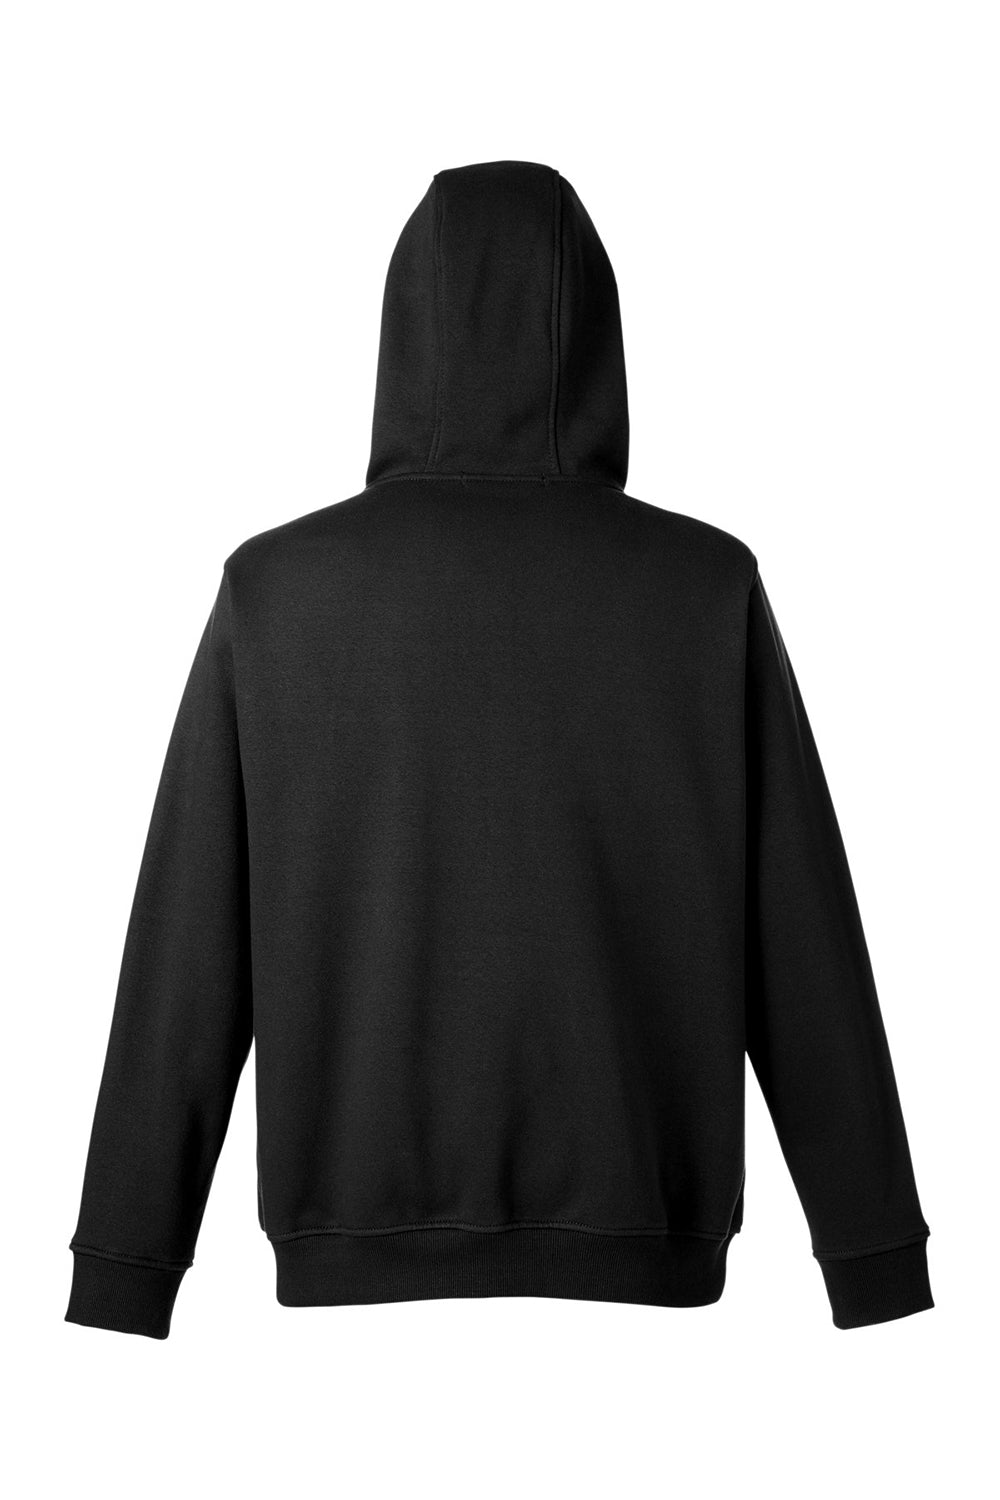 Harriton M711/M711T Mens Climabloc Full Zip Hooded Sweatshirt Hoodie Black Flat Back